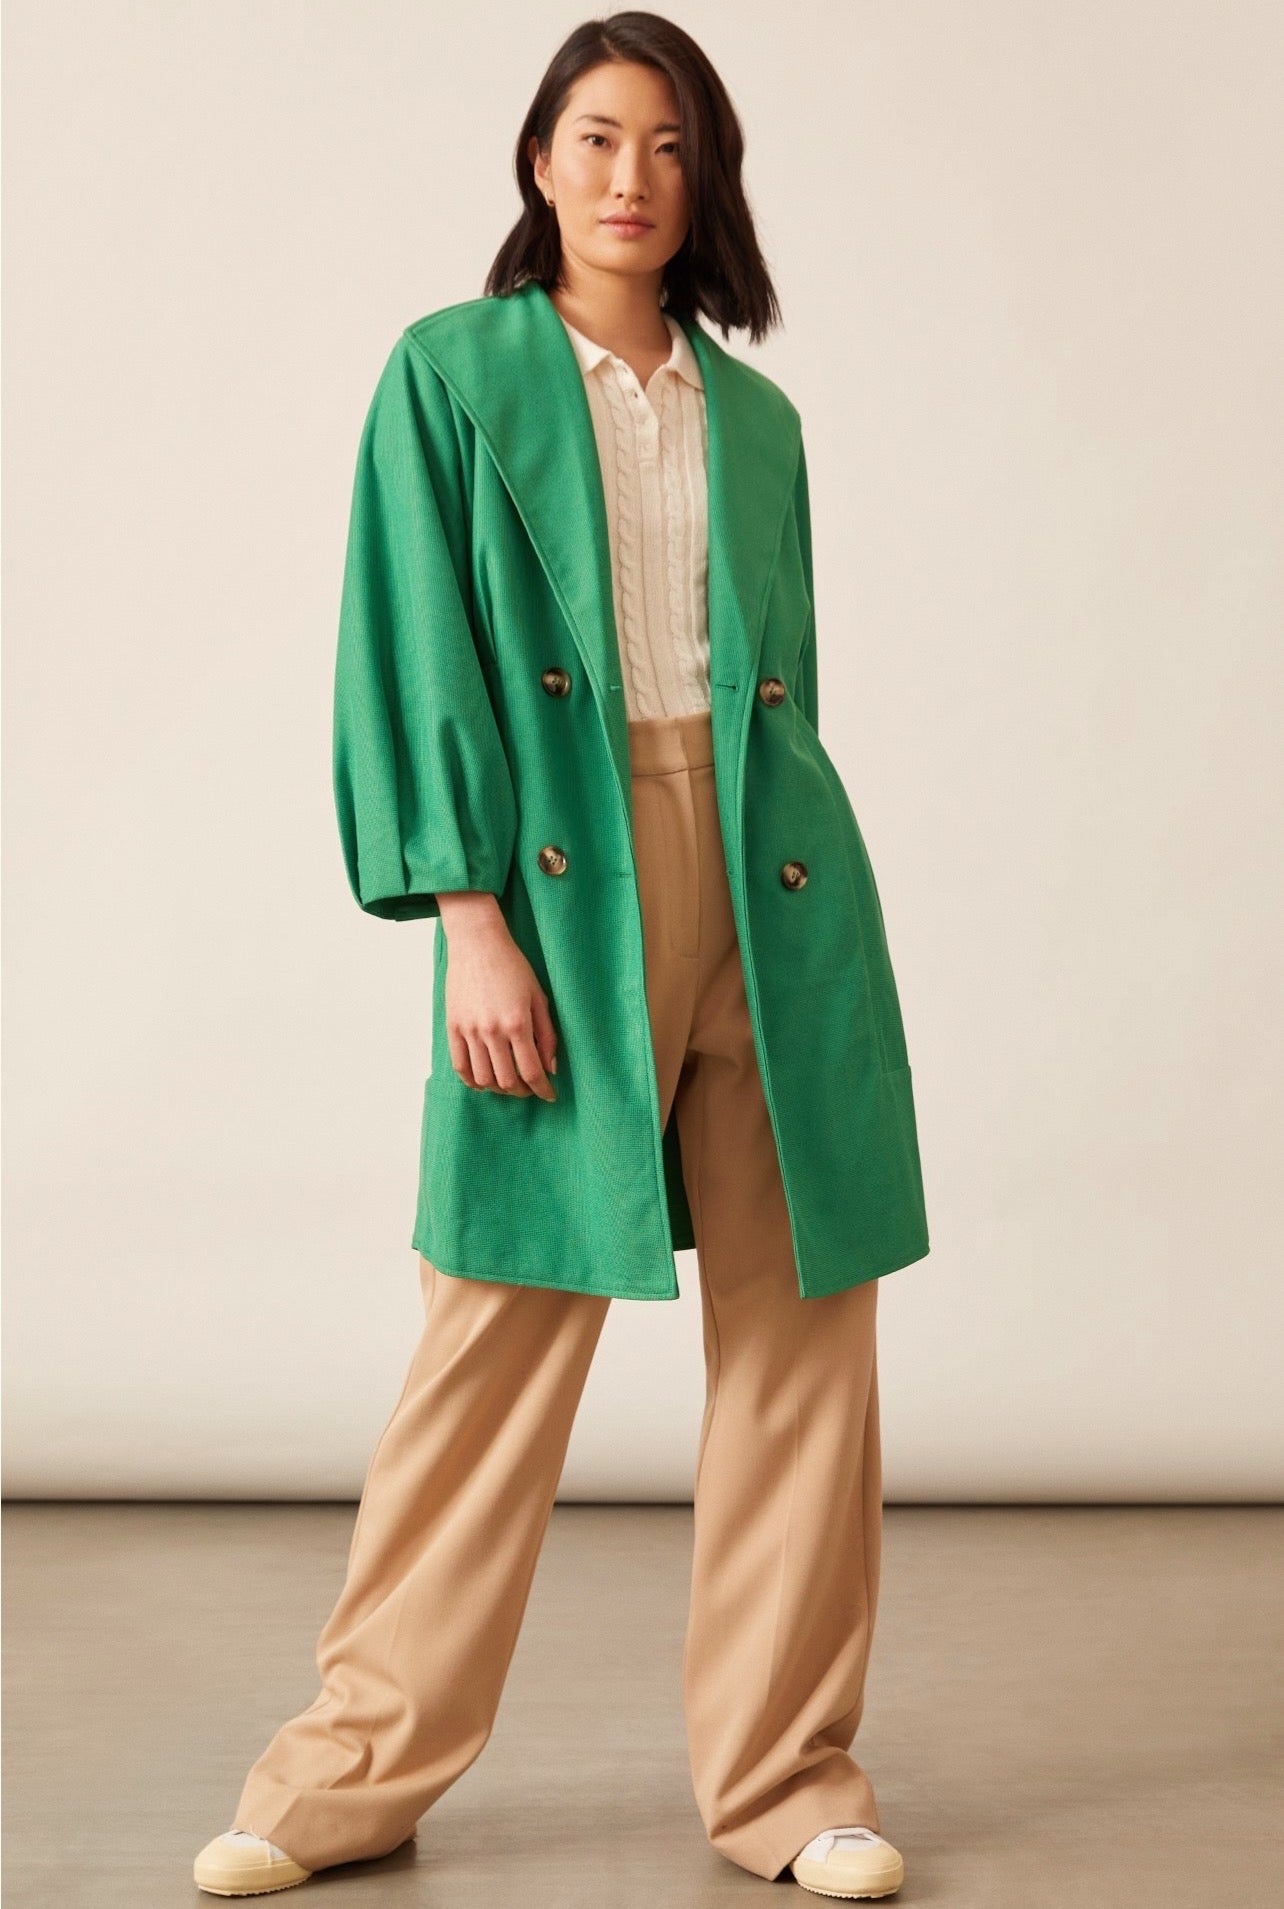 4-H Cotton Blend Jacket Front Design Only – Shop 4-H